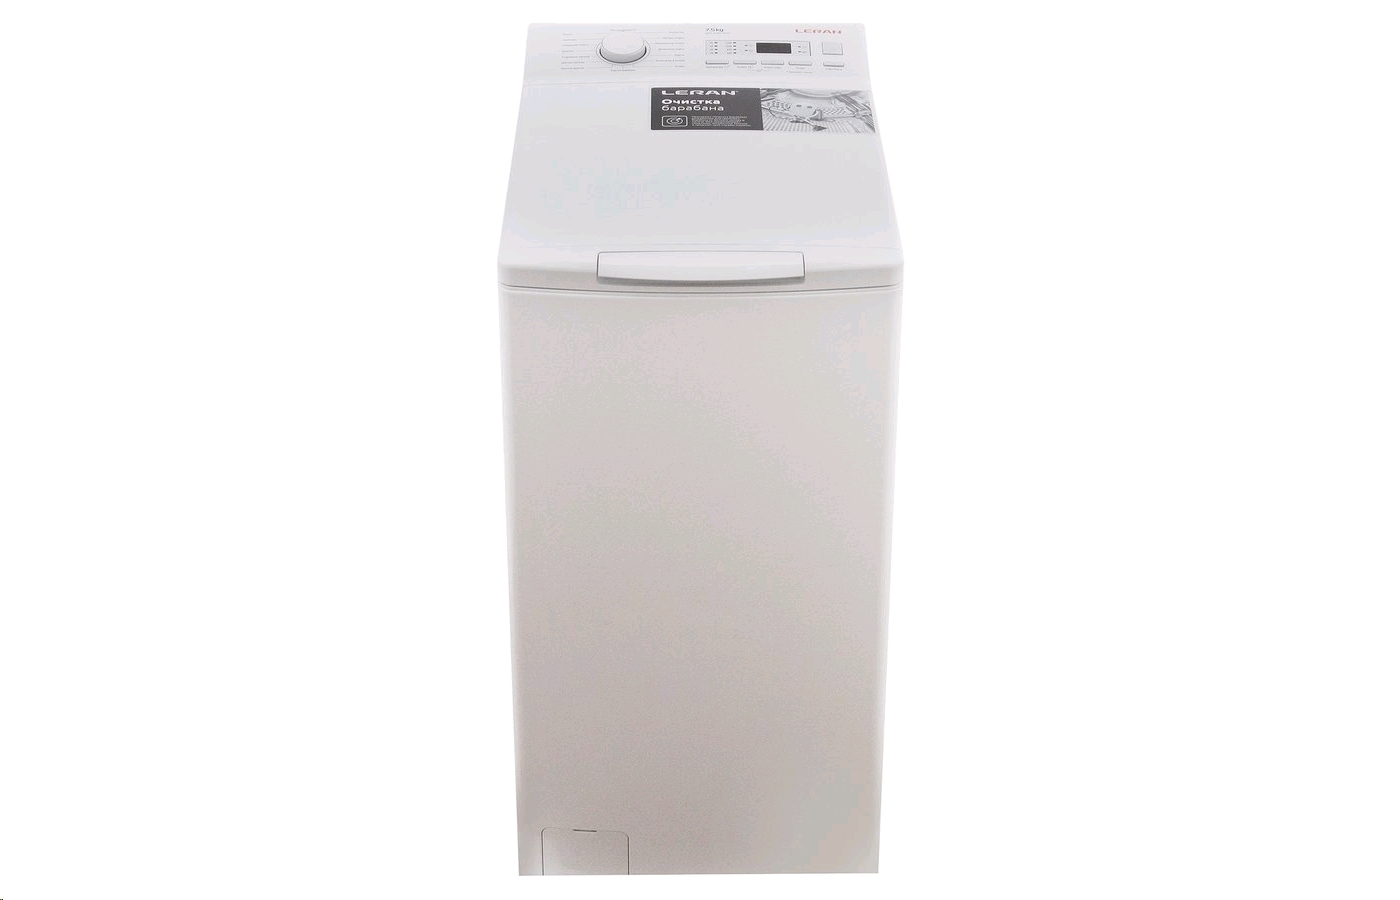 Leran WTL 52127 WD2 стиральная машина